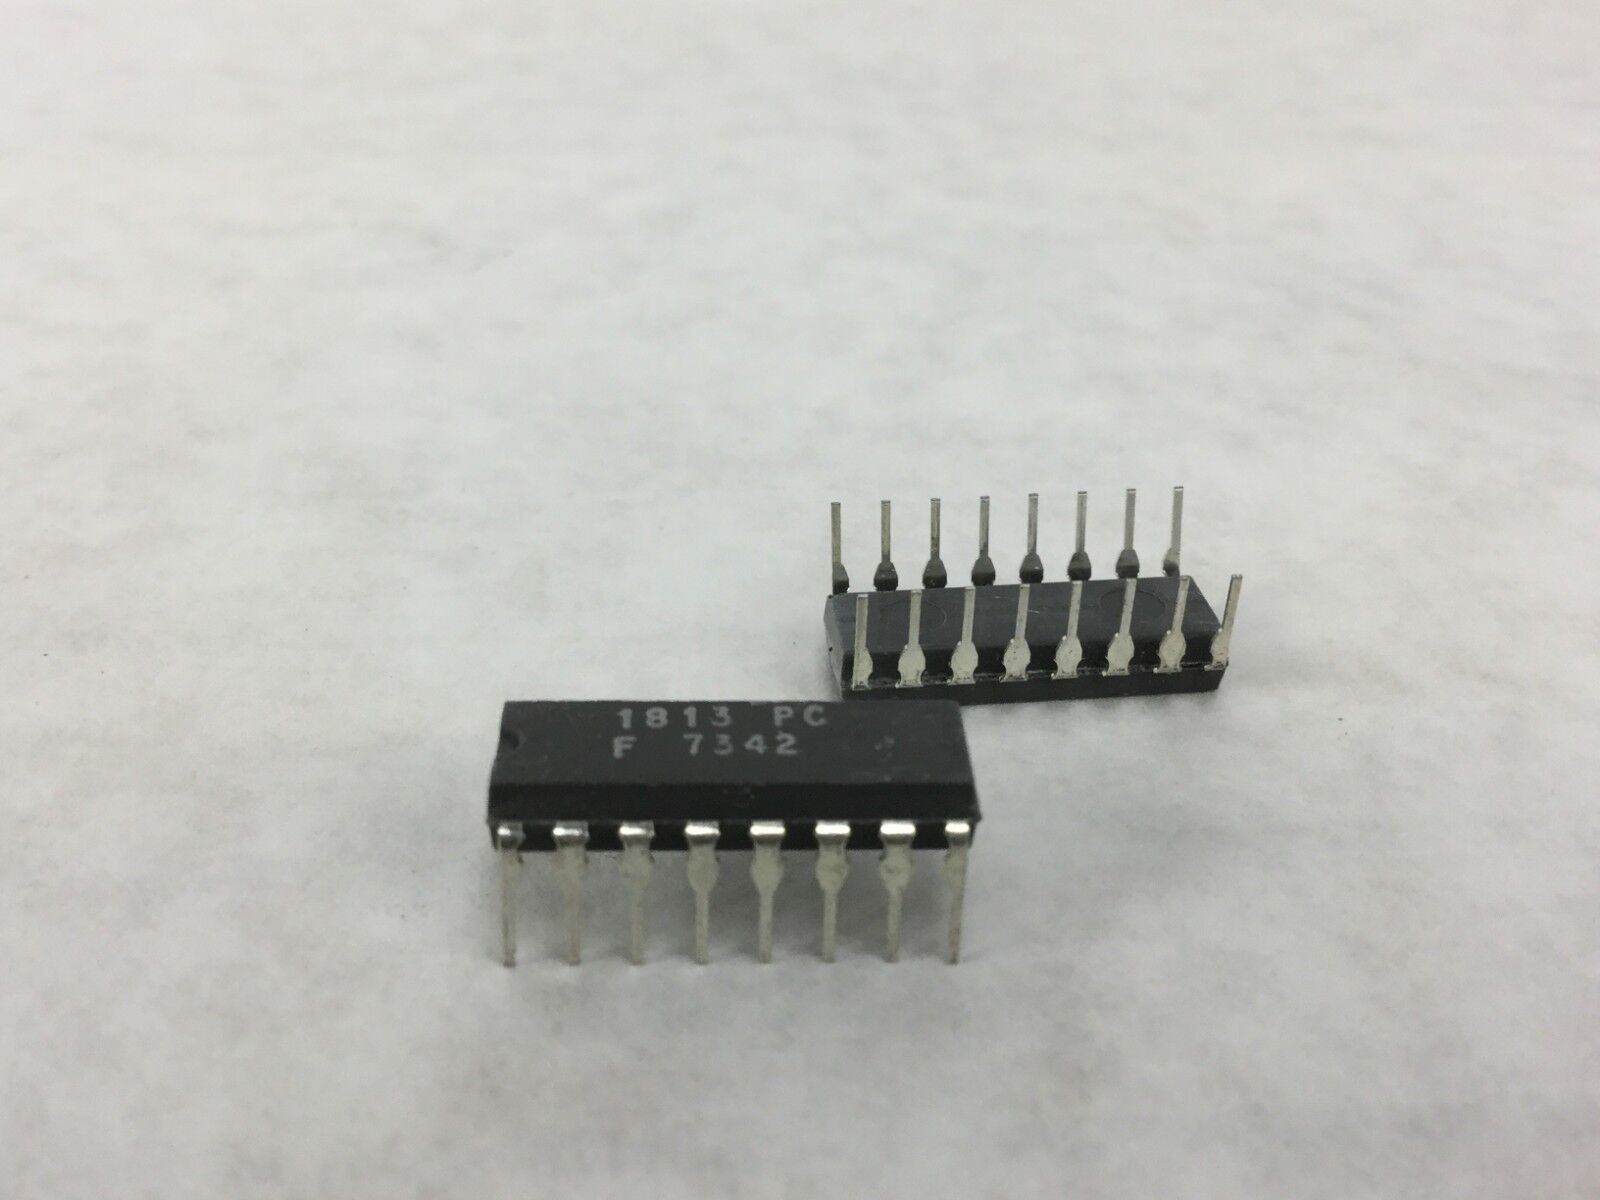 FAIRCHILD 1813 PC  16-Pin Dip Integrated Circuit  Lot of 15